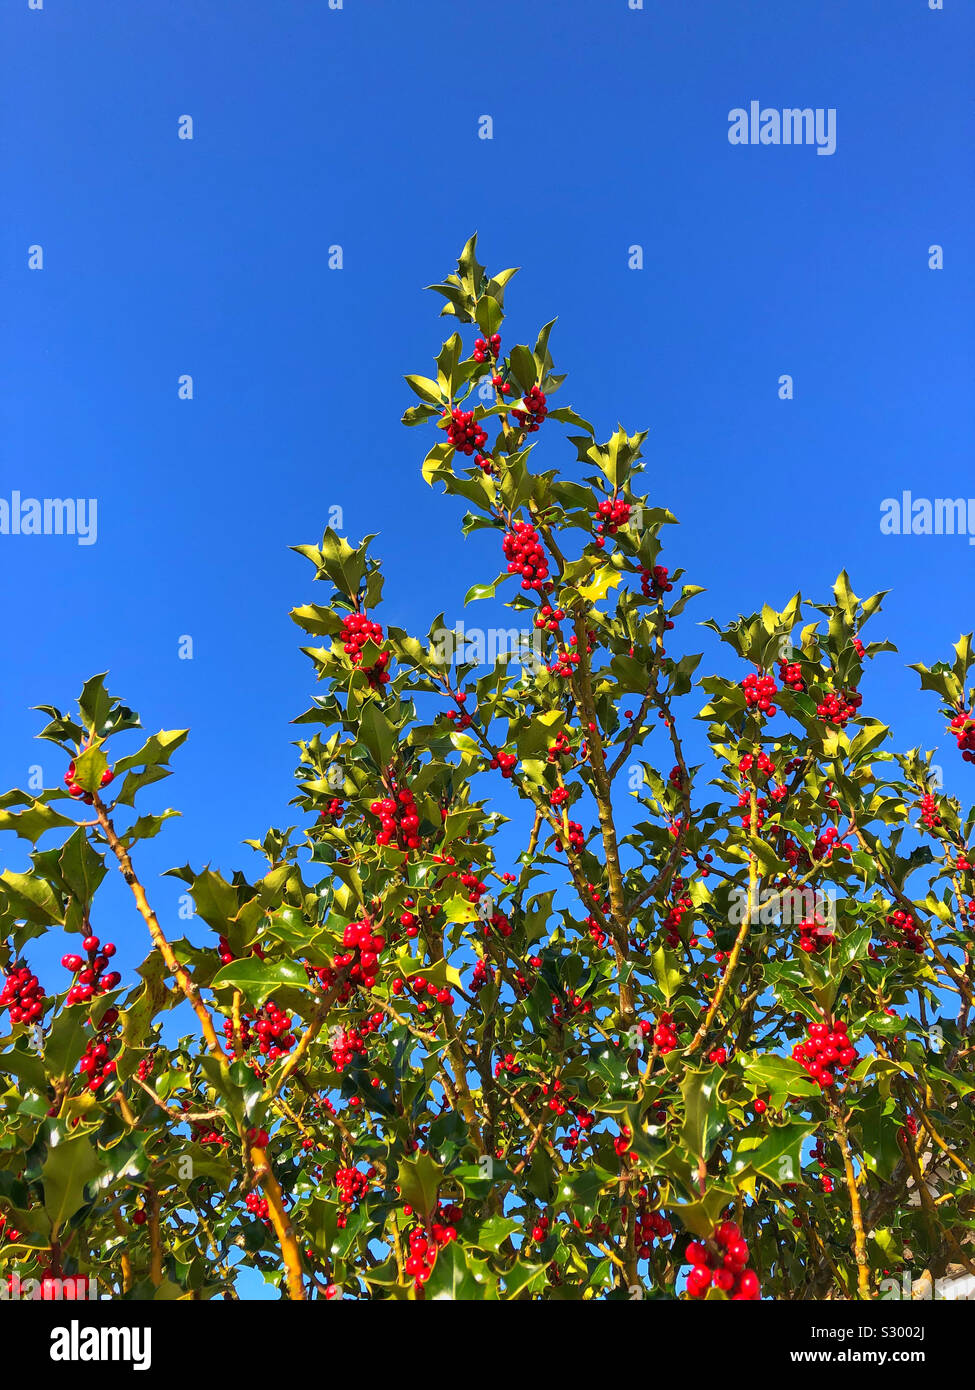 Holly bacche contro un cielo blu, Novembre. Foto Stock